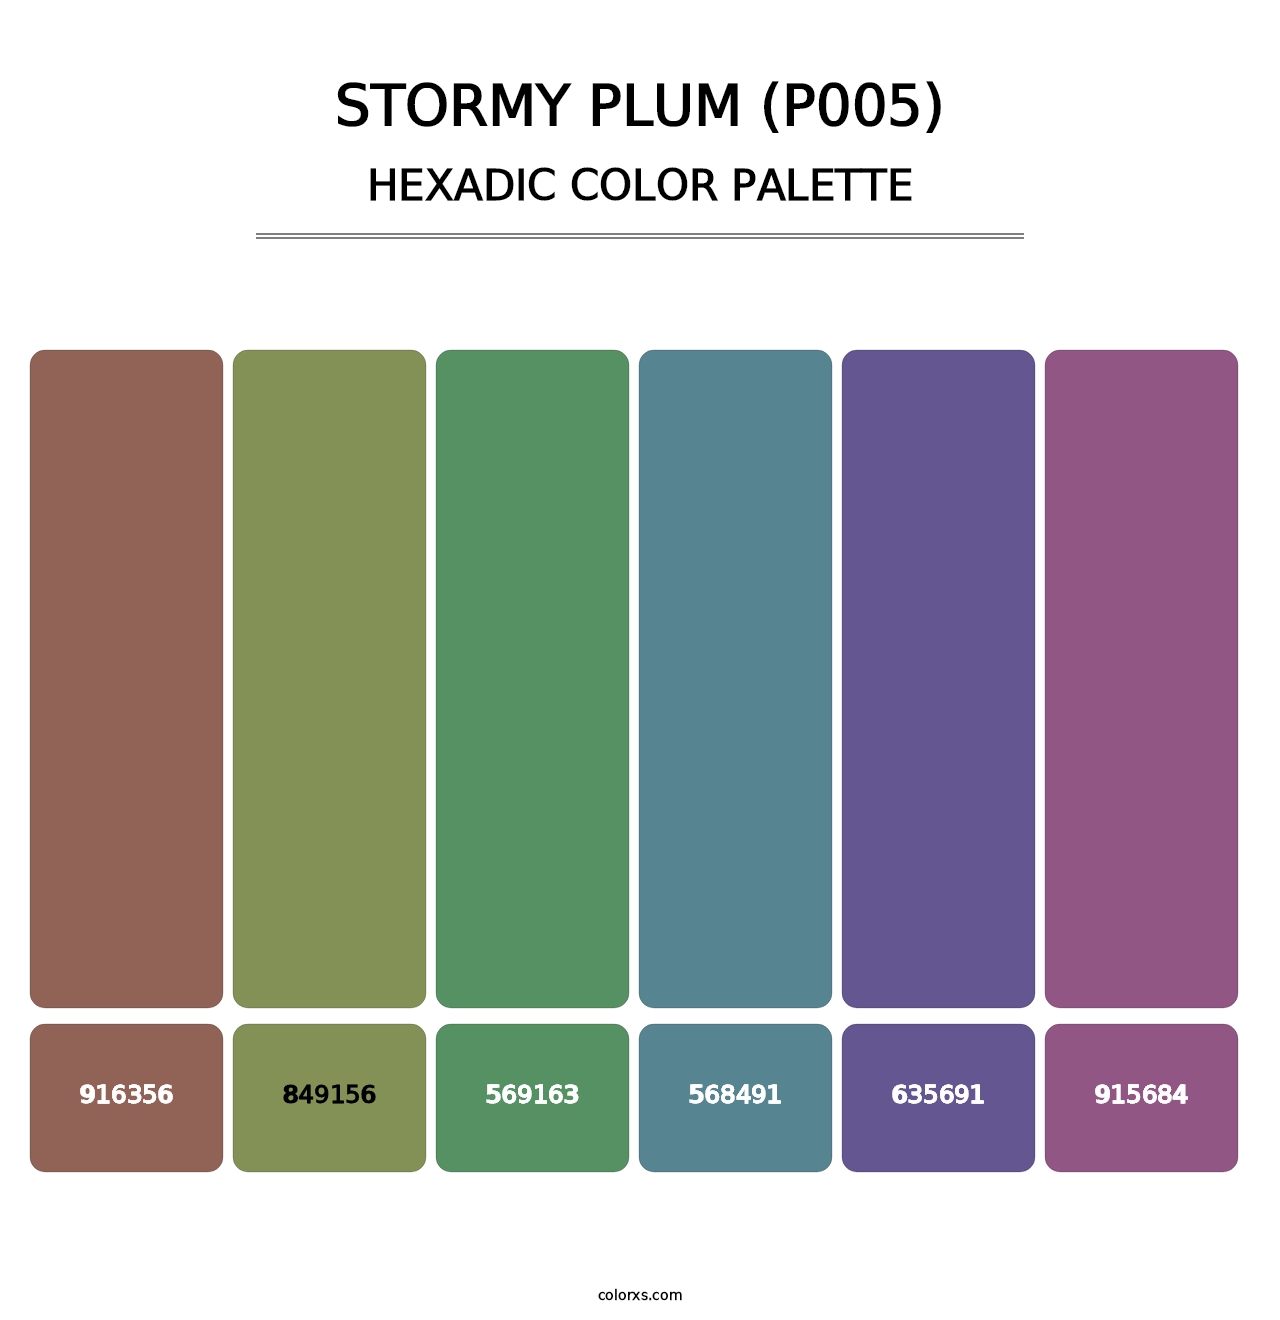 Stormy Plum (P005) - Hexadic Color Palette